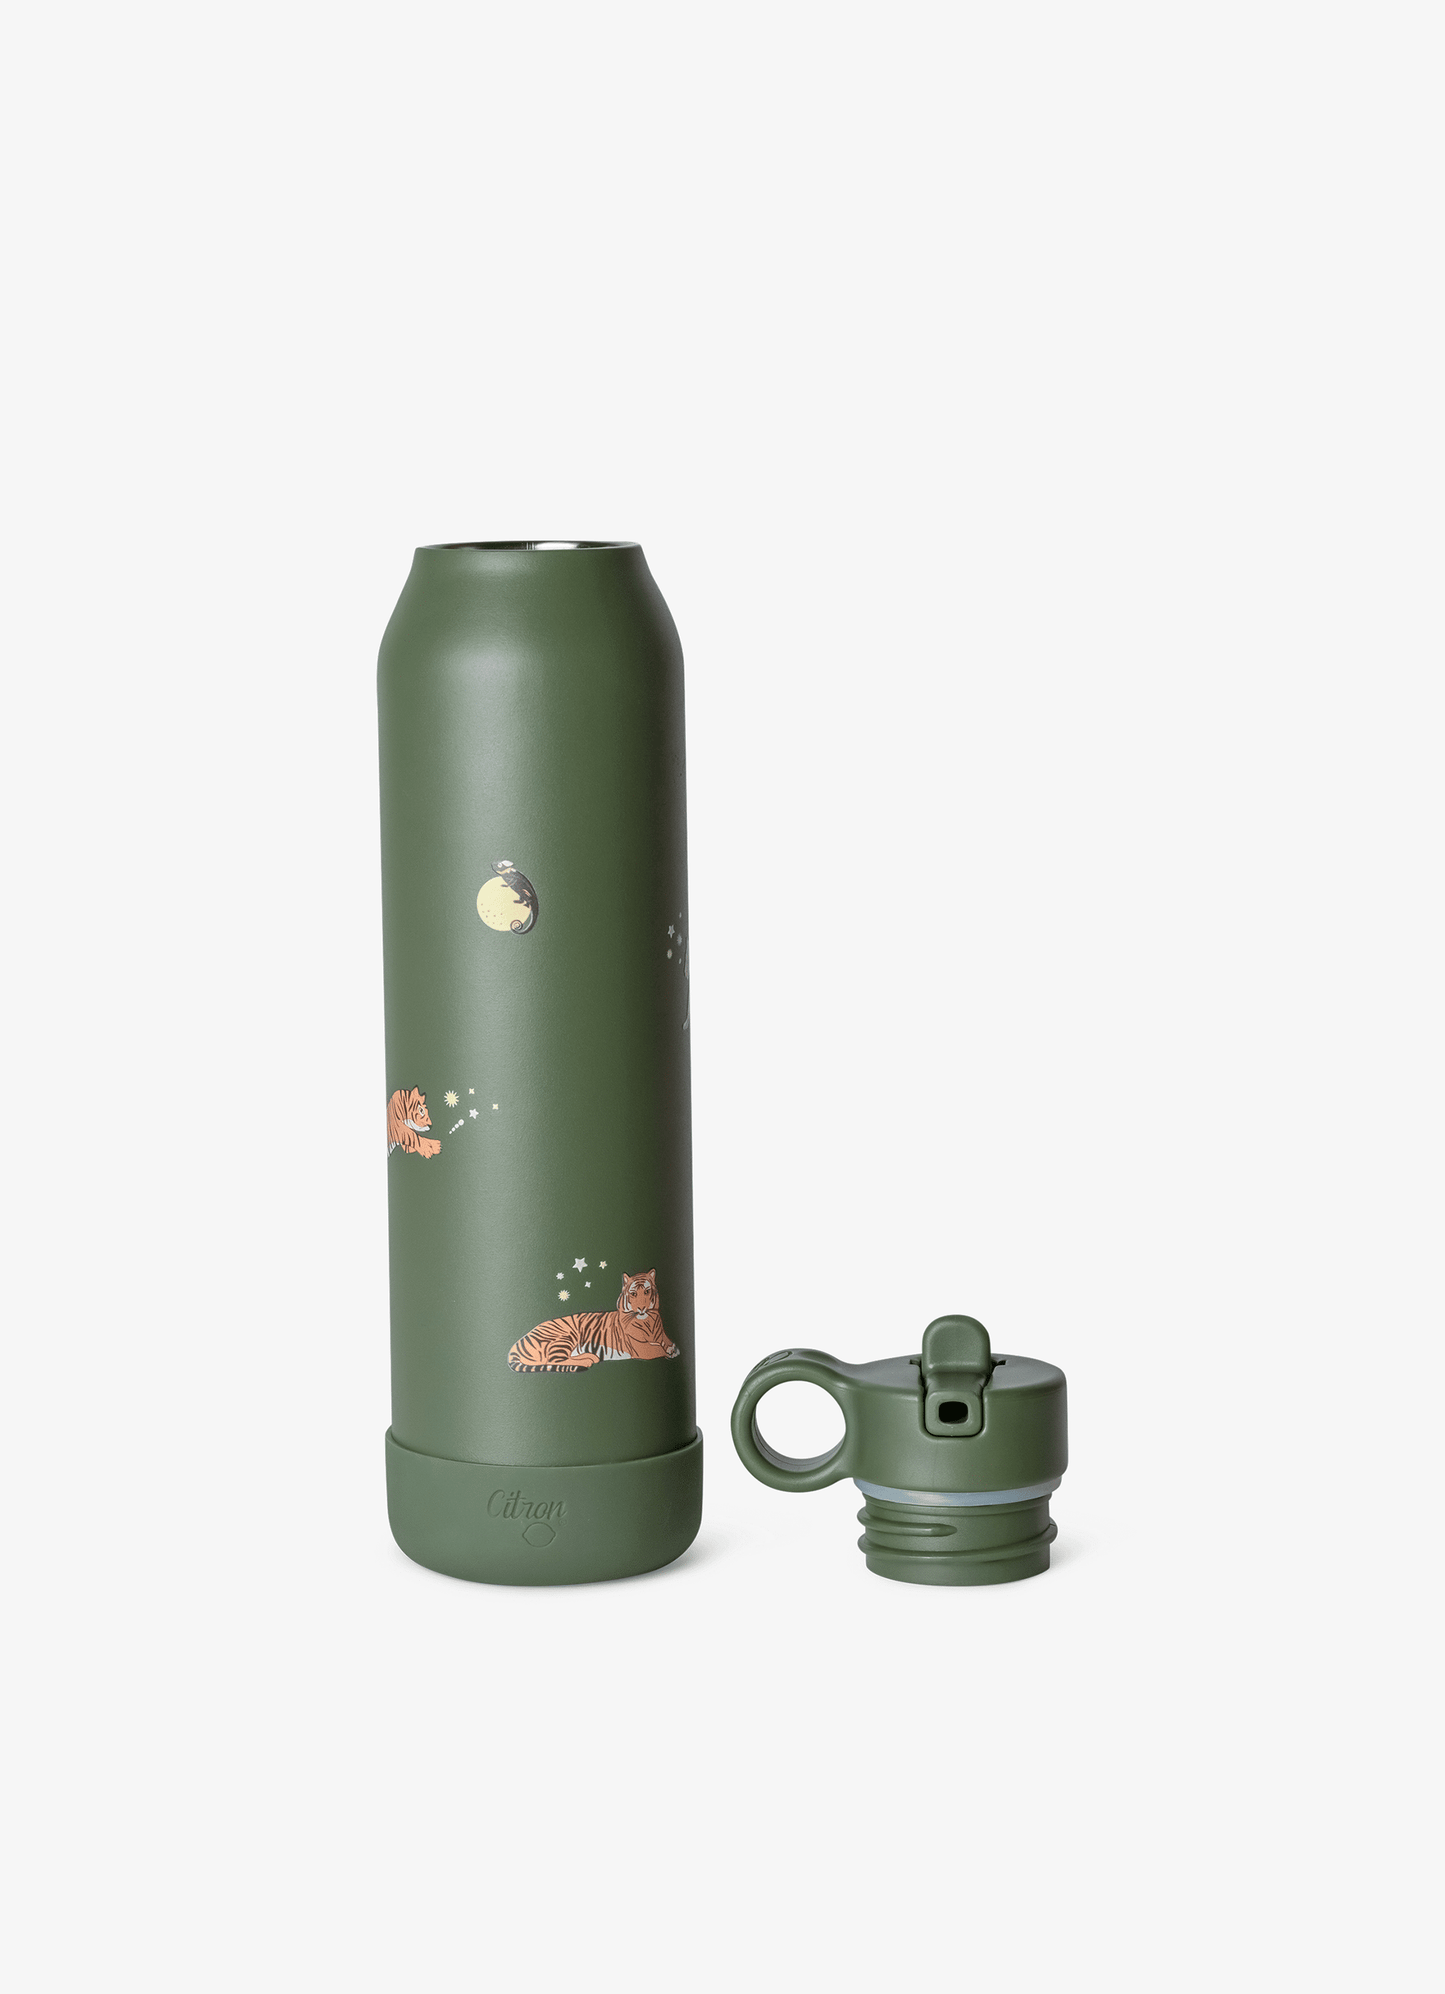 Medium Water Bottle - 500ml - Tiger